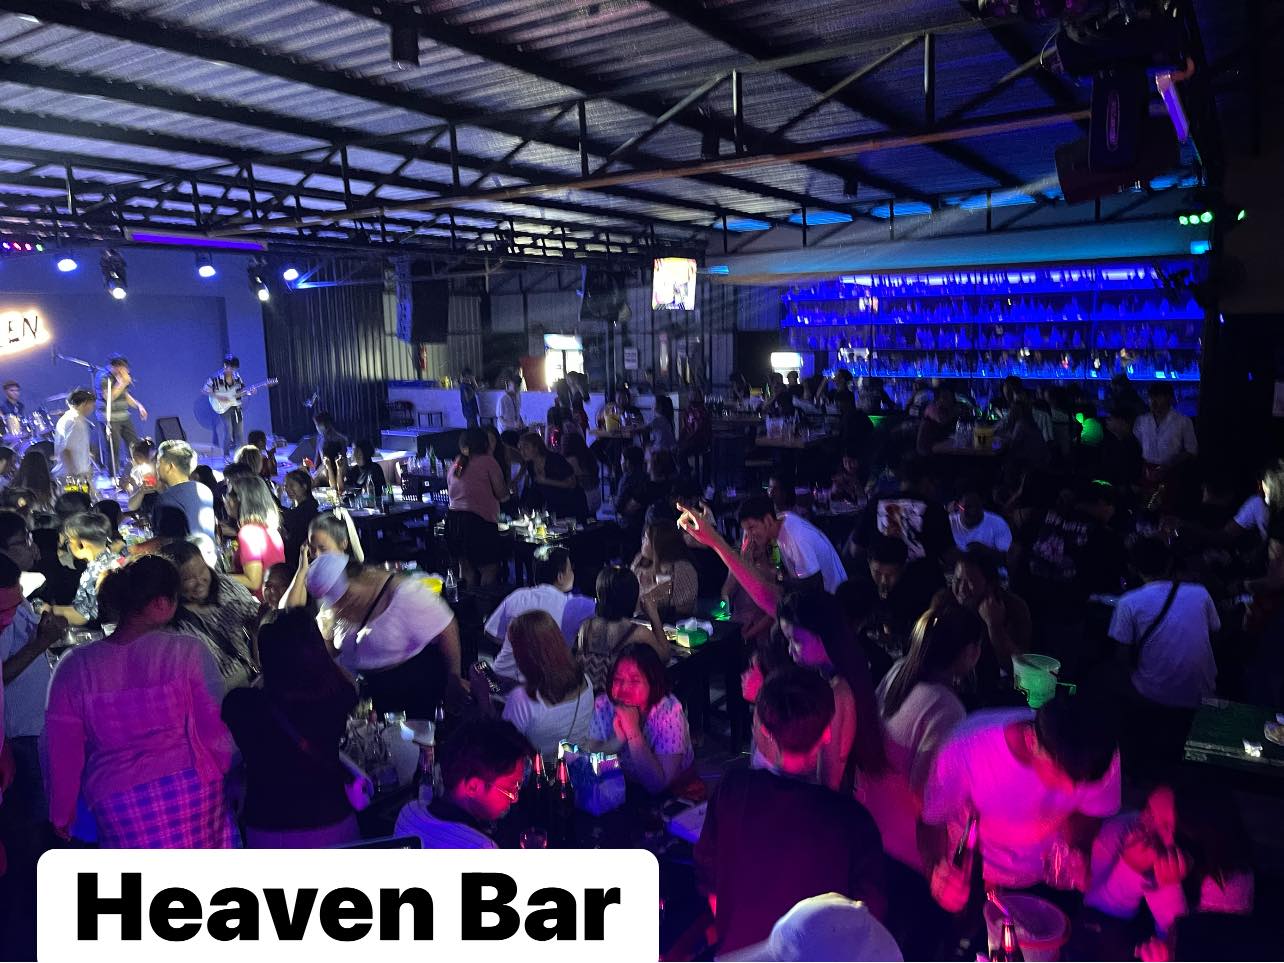 Heaven Bar (Heaven Bar) : Chanthaburi (จันทบุรี)